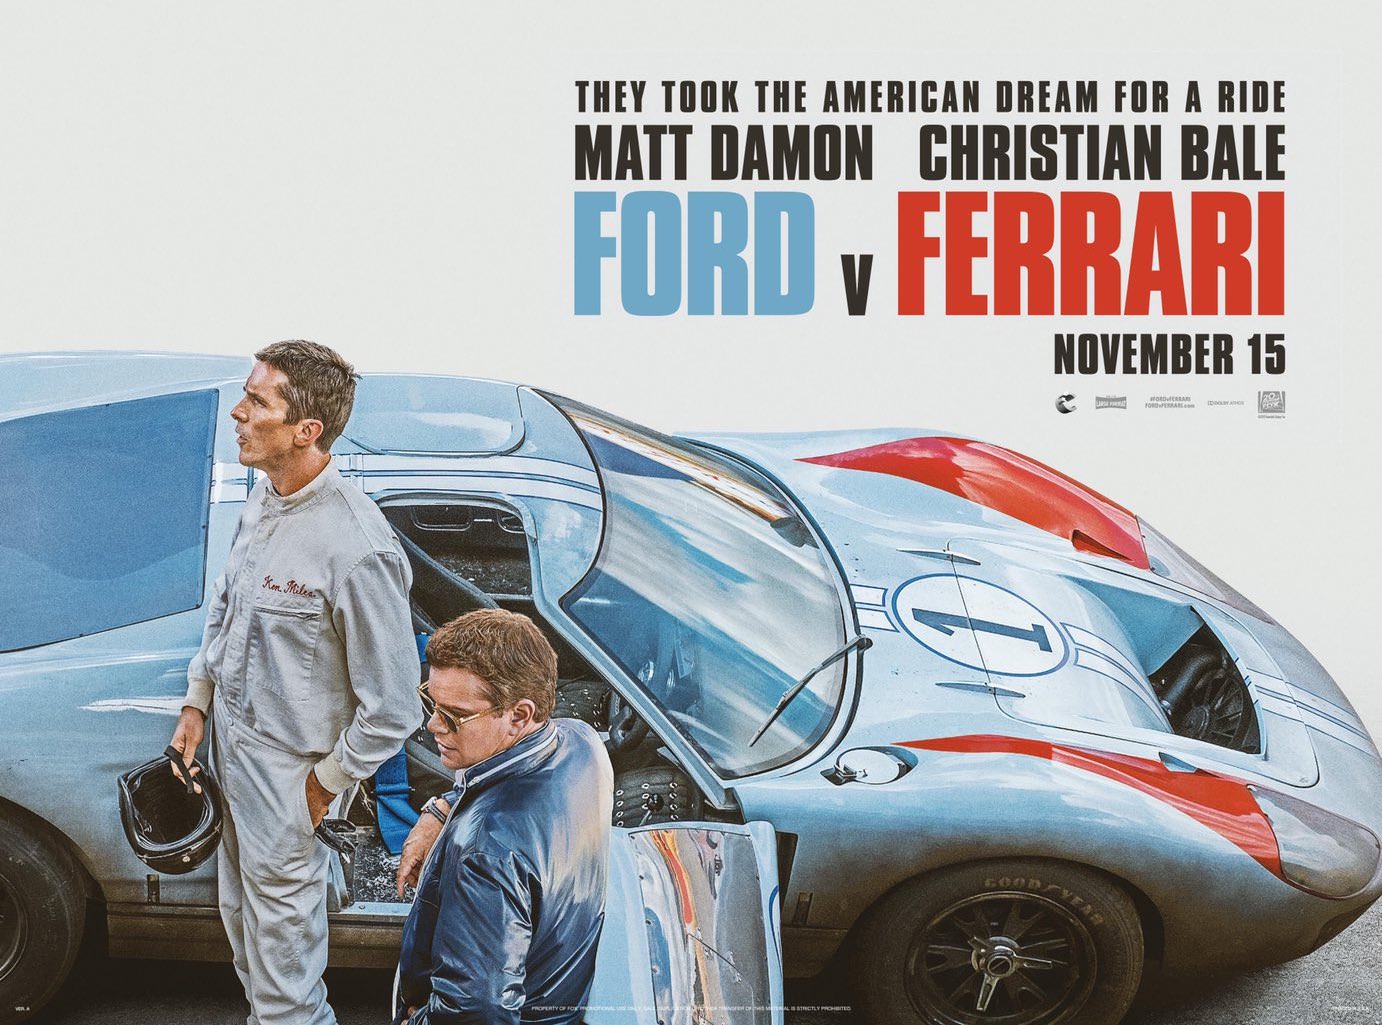 Ford v. Ferrari: Watch The Original 1966 Le Mans Documentary - "This